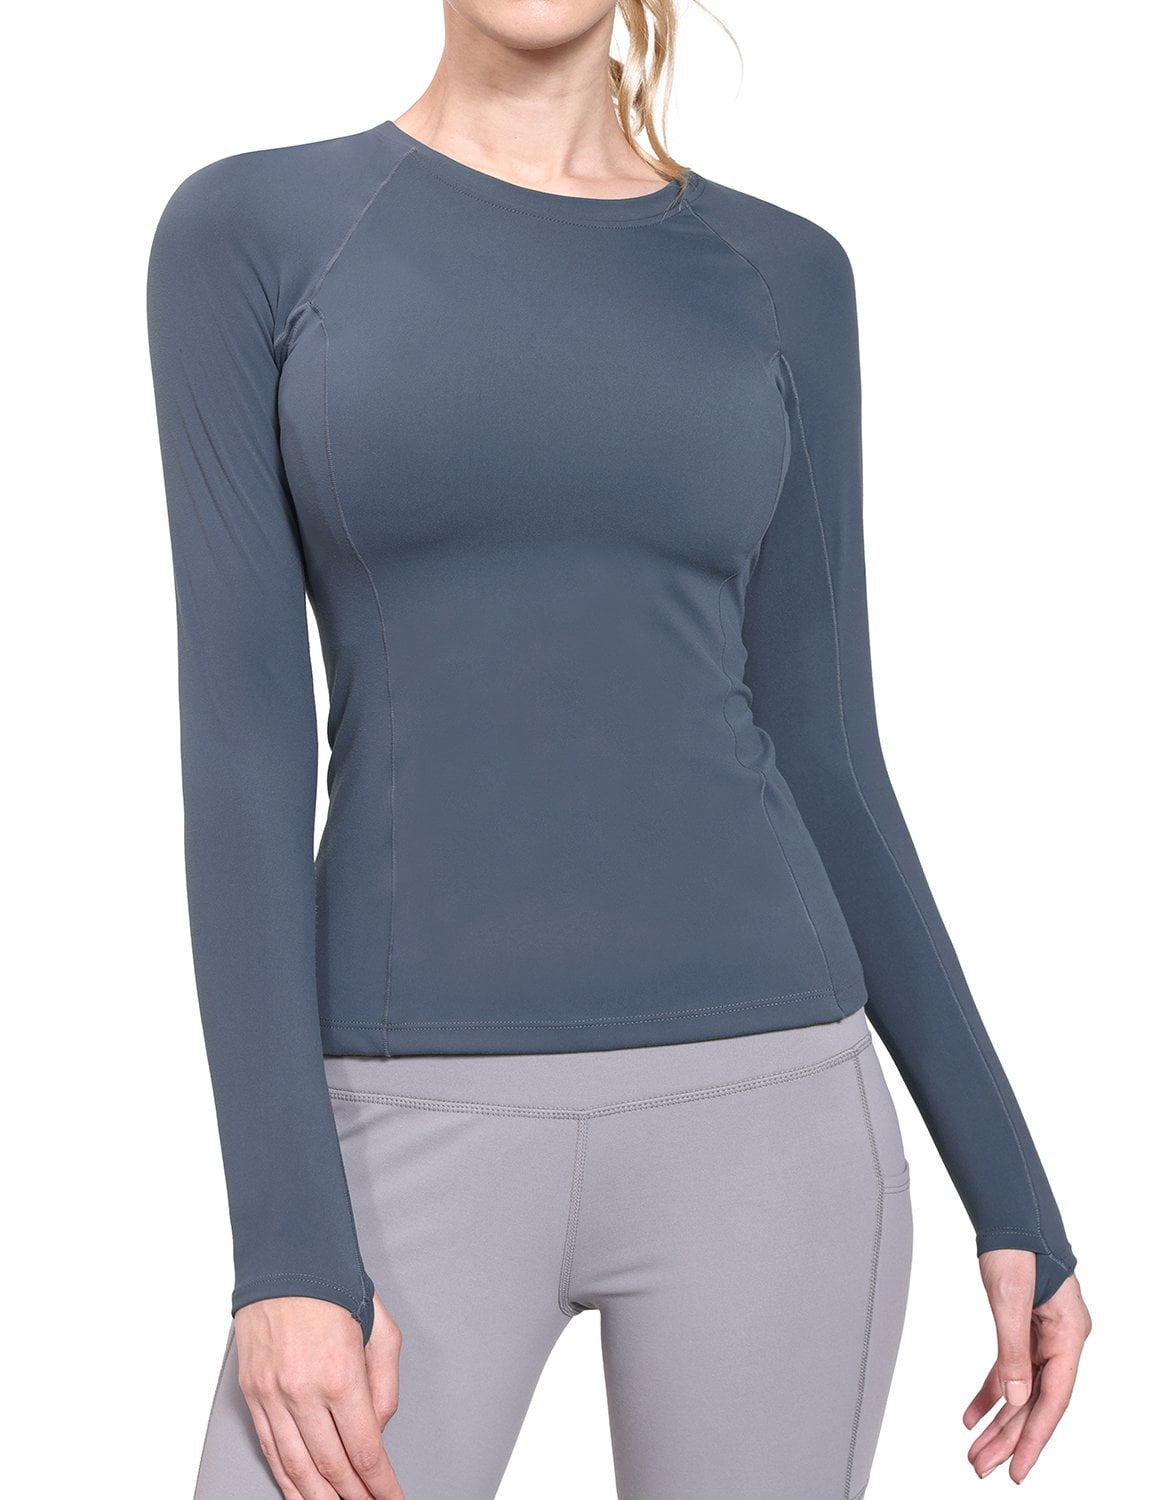 BALEAF Women's Long Sleeve Lightweight Yoga Running Sport Shirts Underscrub  with Thumb Holes Black S Wine XL 